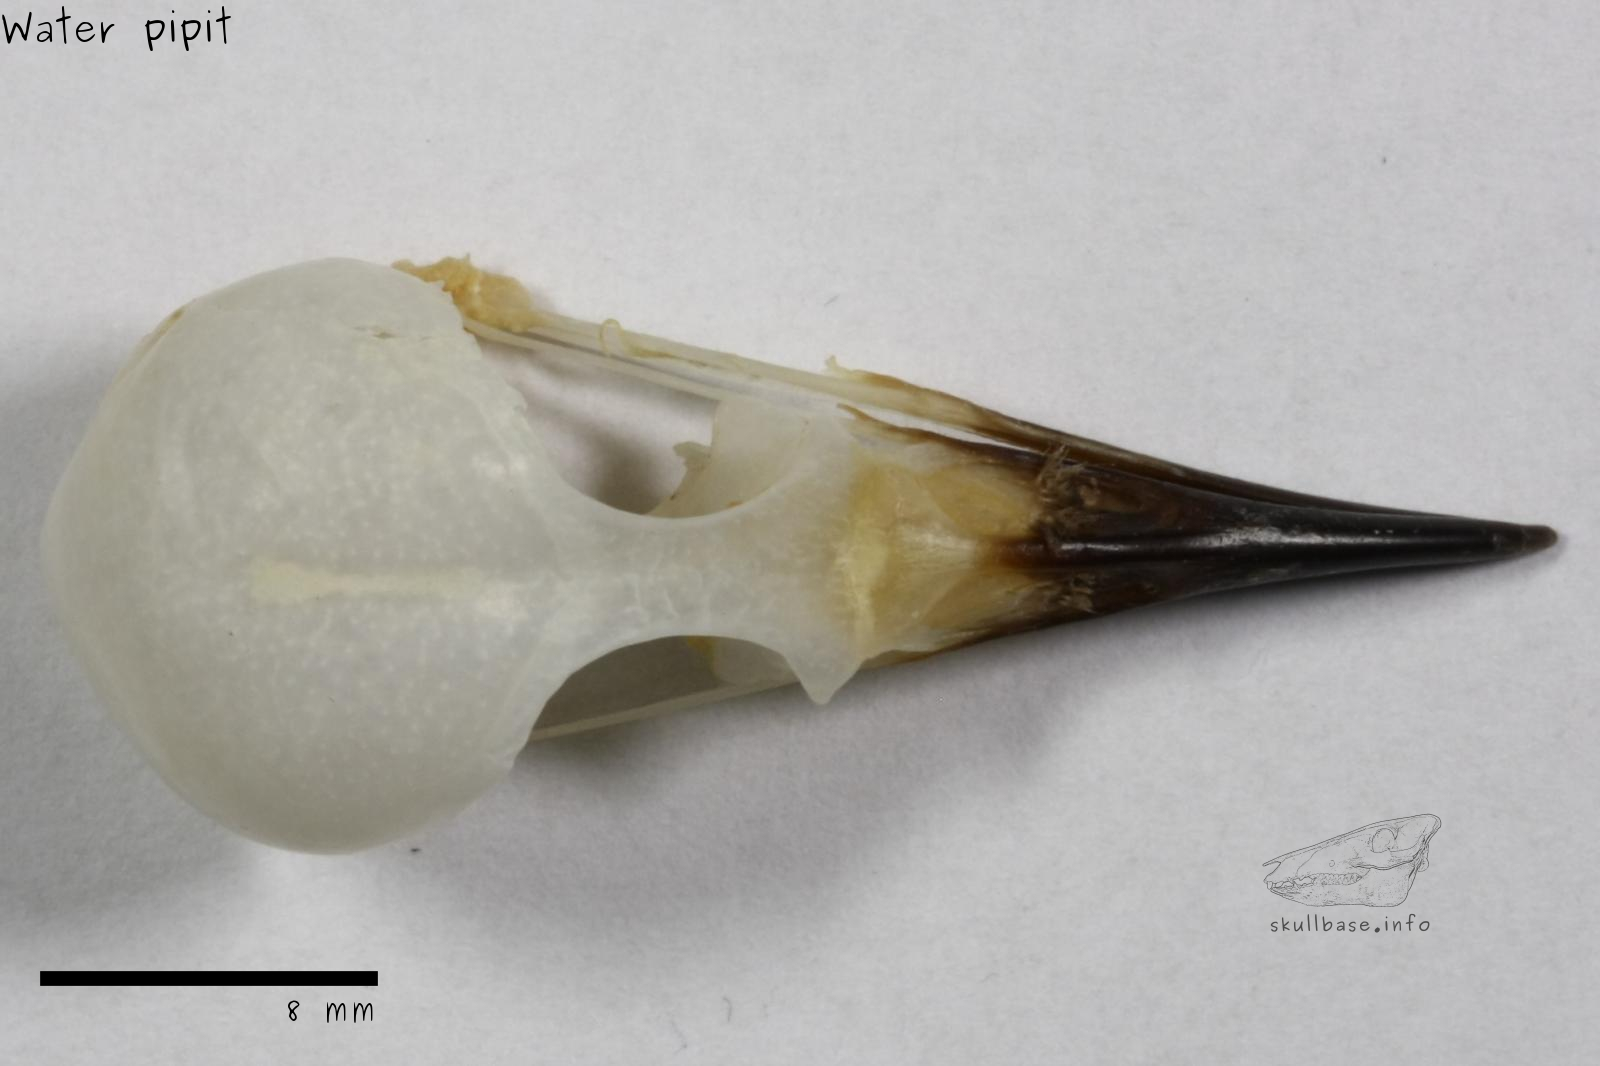 Water pipit (Anthus spinoletta) skull dorsal view